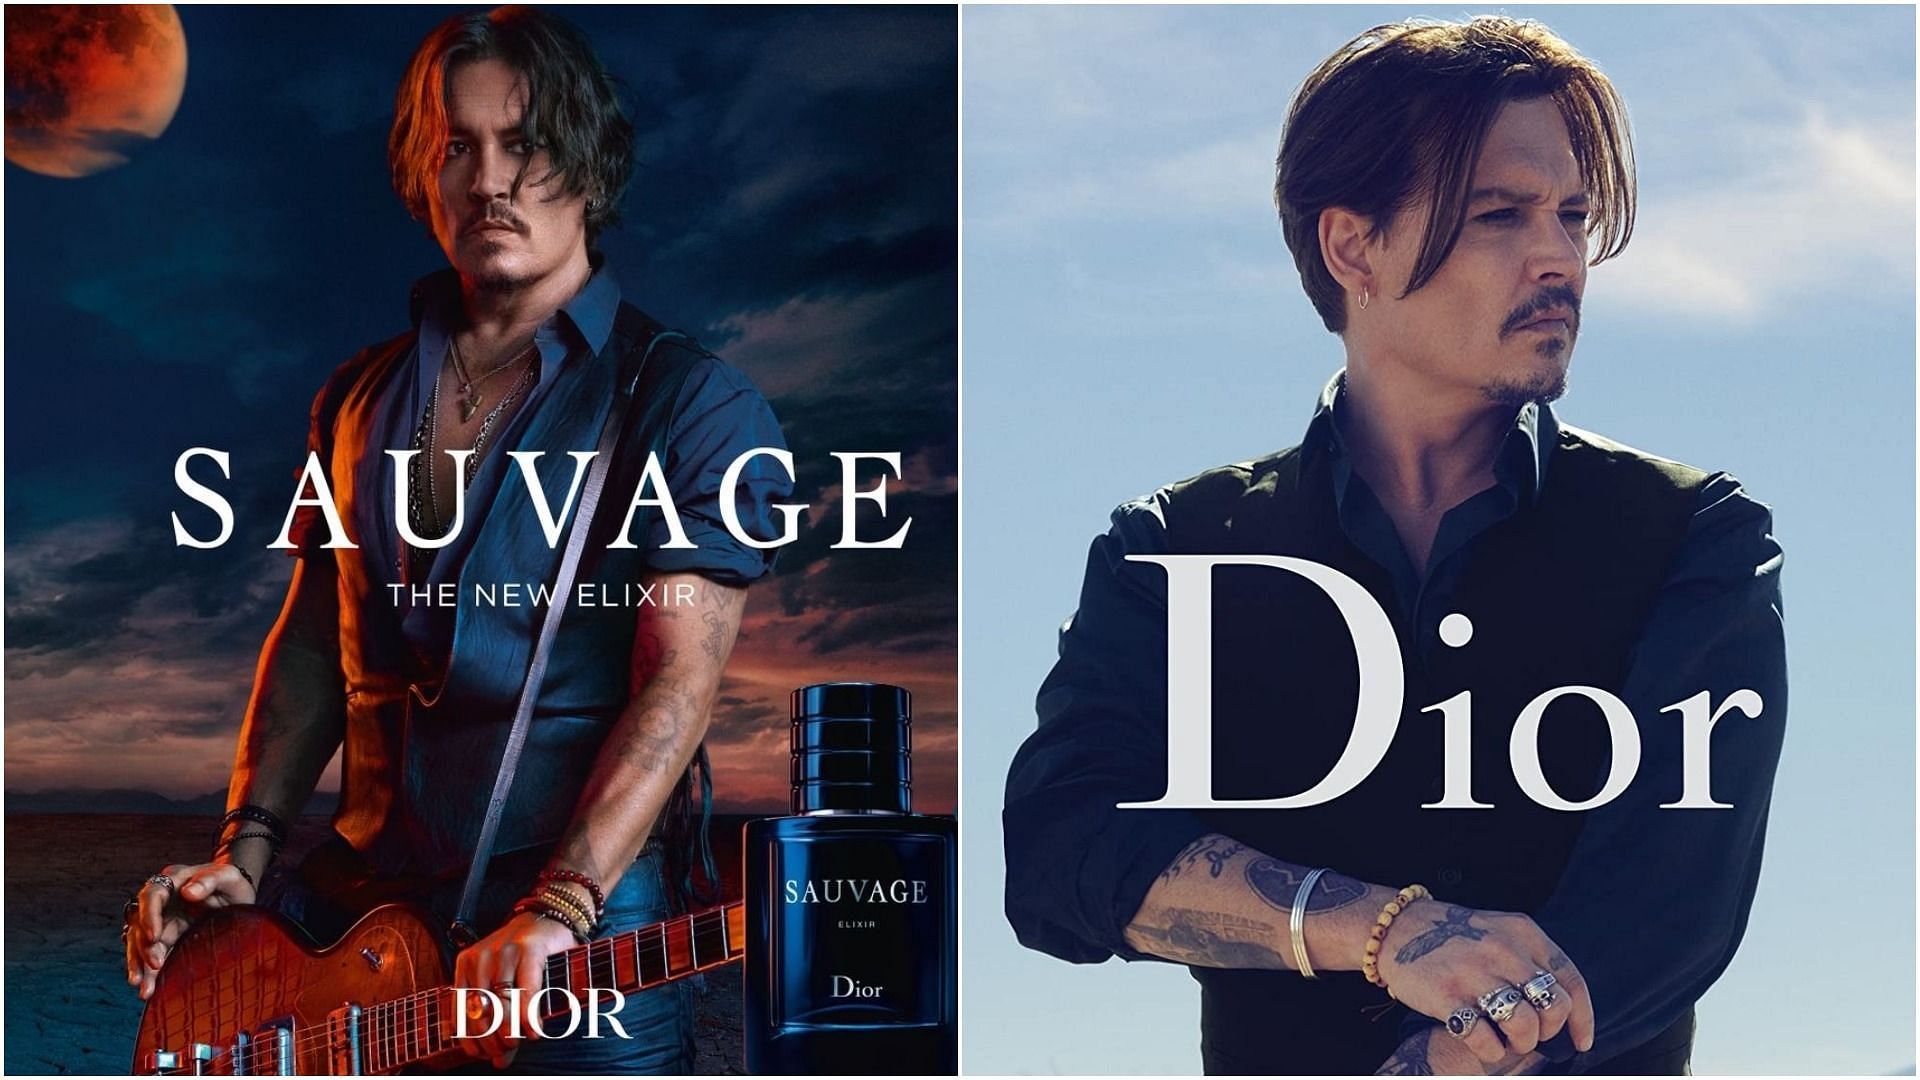 Johnny Depp’s Dior cologne ad receives prime time slot after Amber